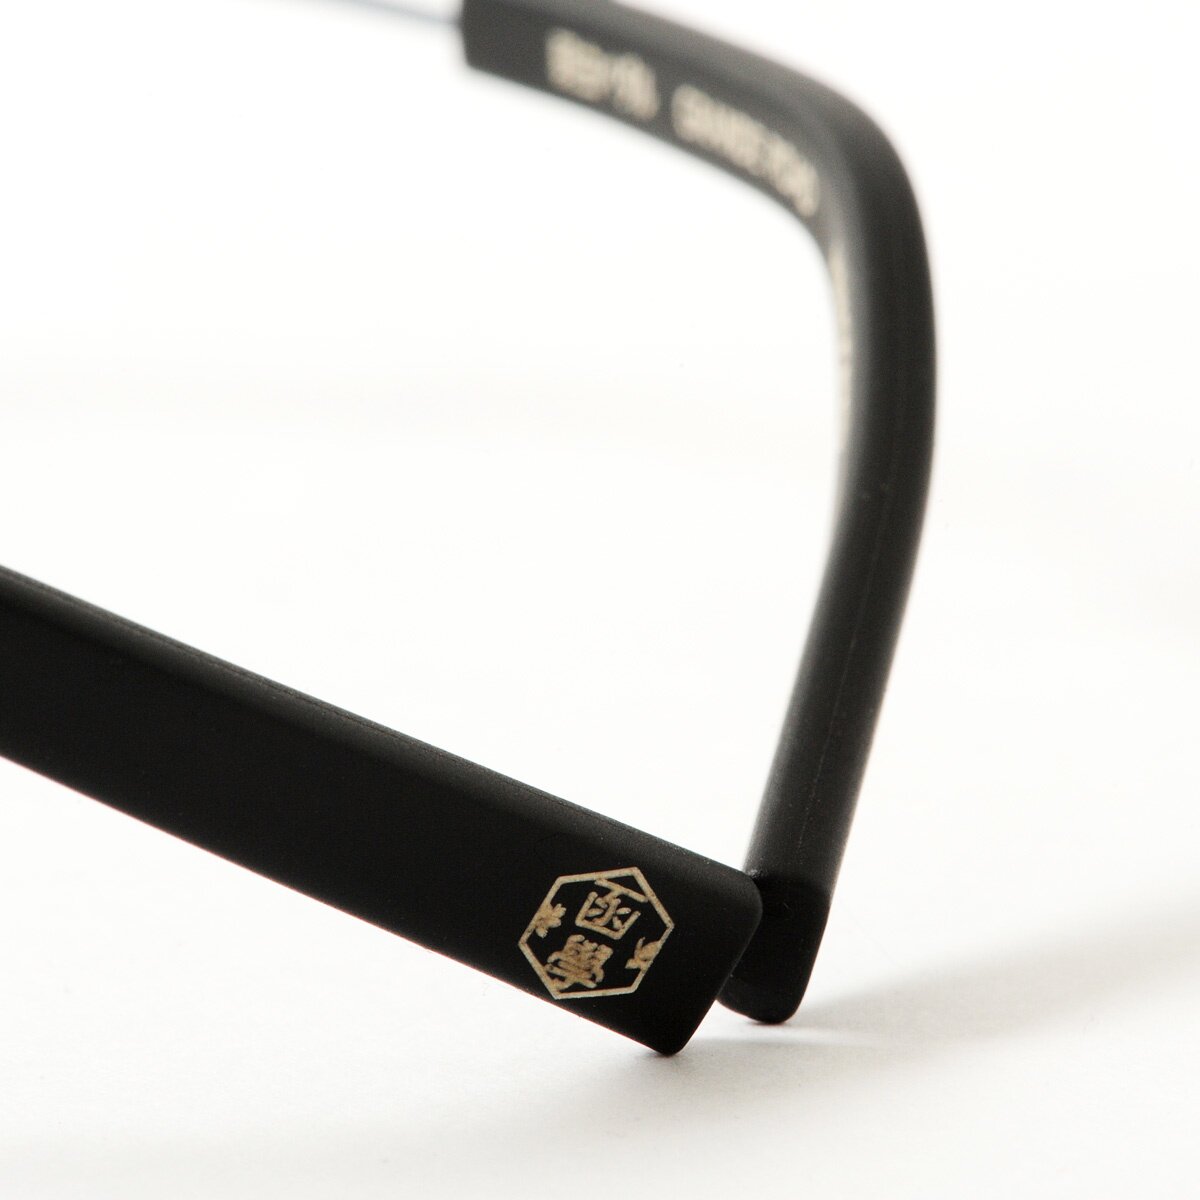 Yowamushi Pedal: Grande Road x Yamashita Megane Collaboration Glasses